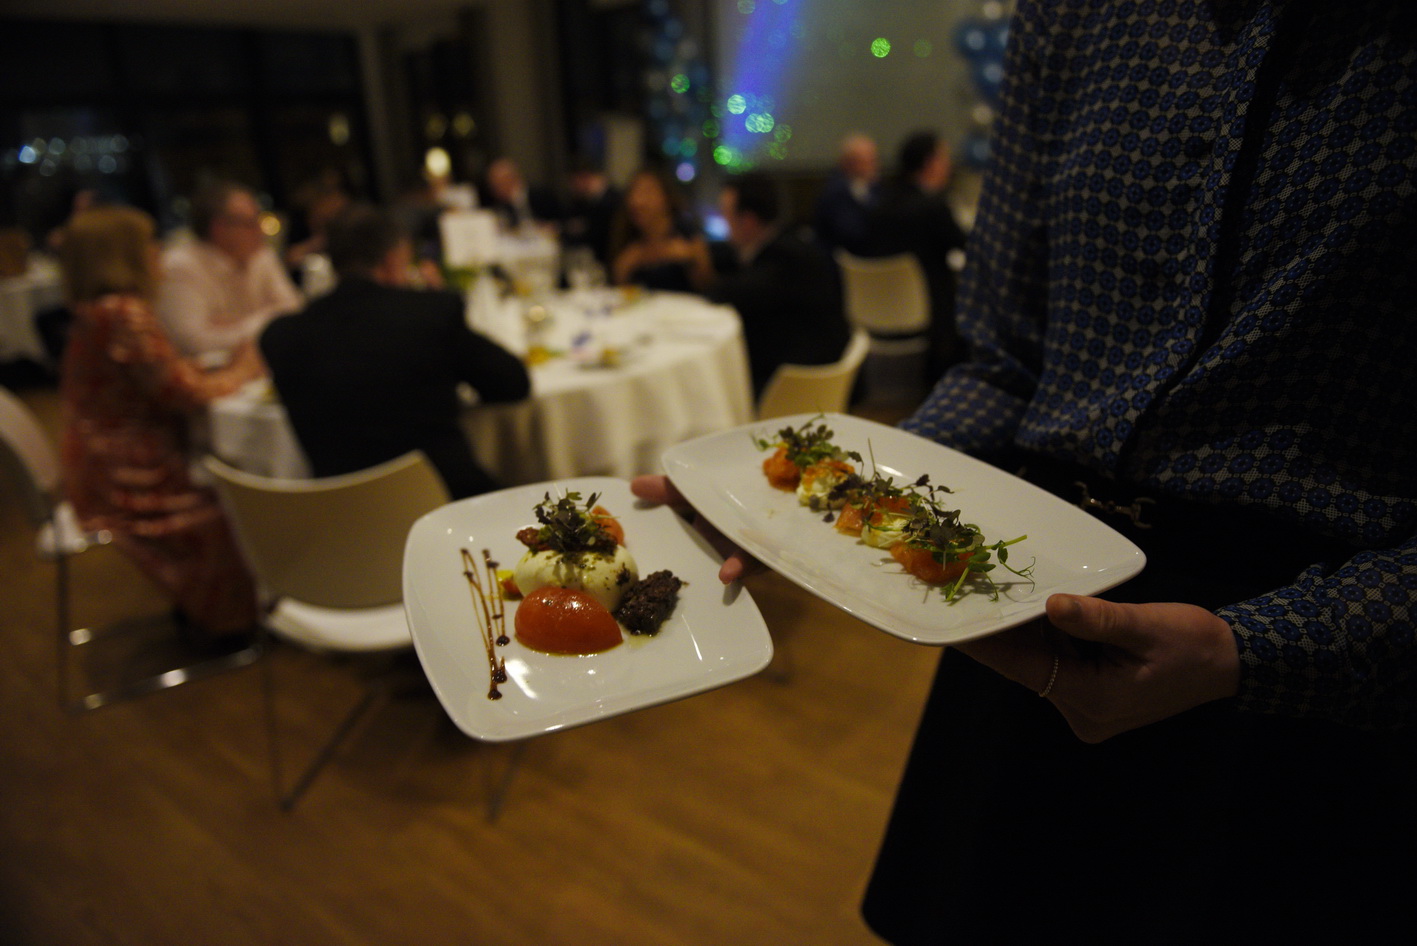 evening awards formal meal photo